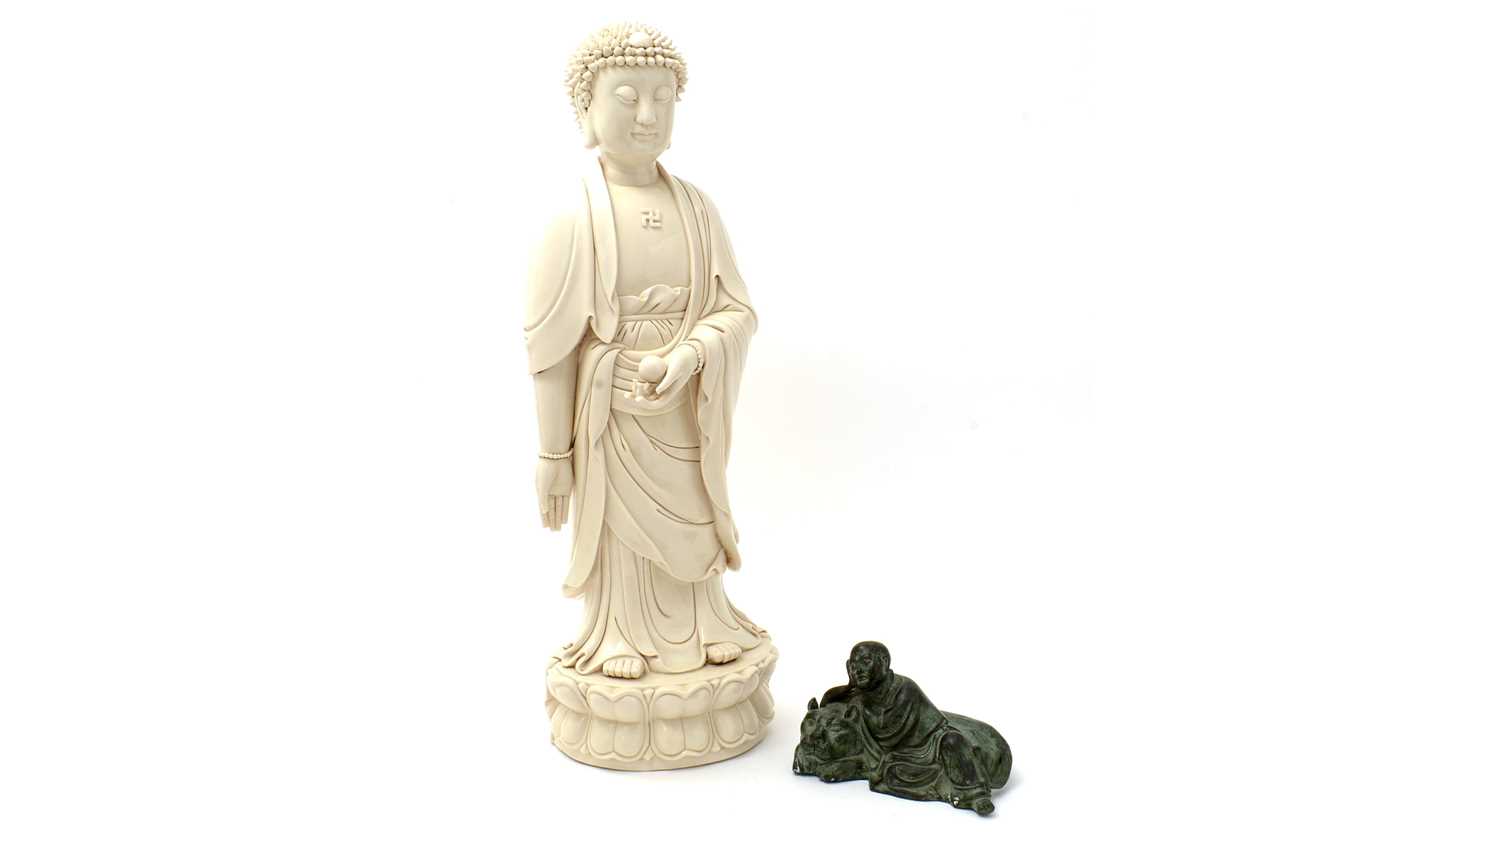 Large blanc de chine style figure Buddha, Bronzed figure and tiger